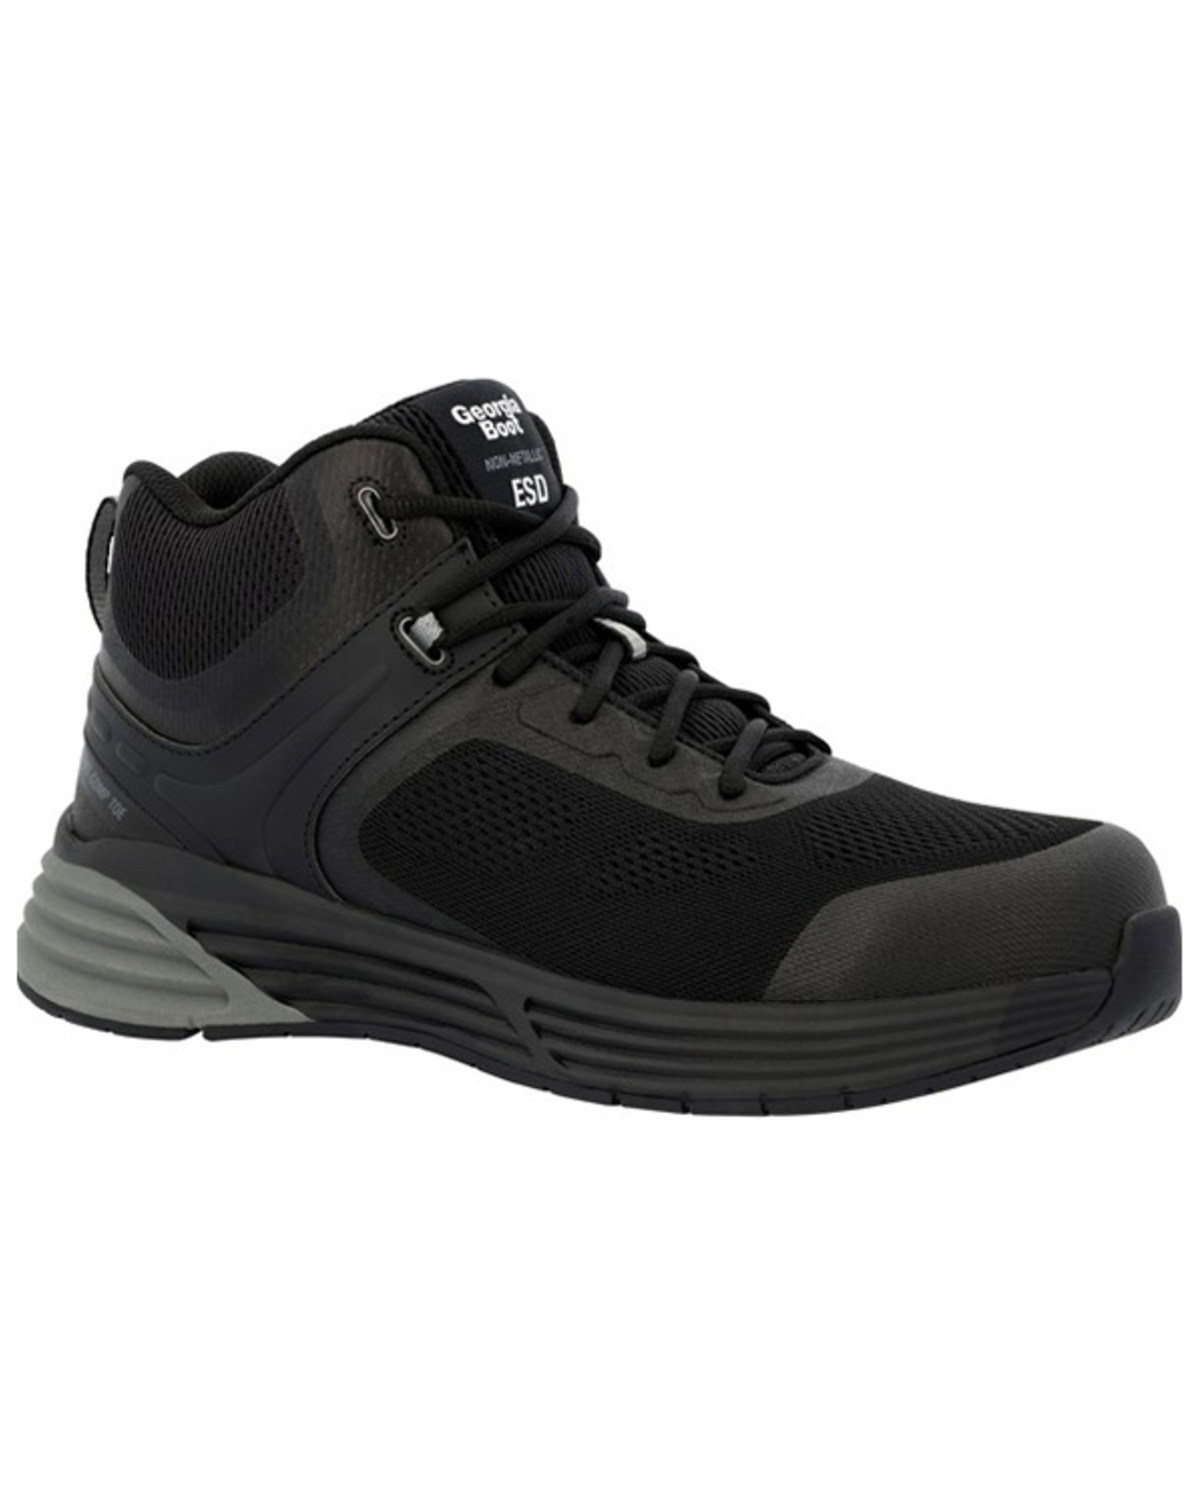 Georgia Boot Men's Durablend Sport Electrical Hazard Athletic Hi-Top Work Shoes - Composite Toe